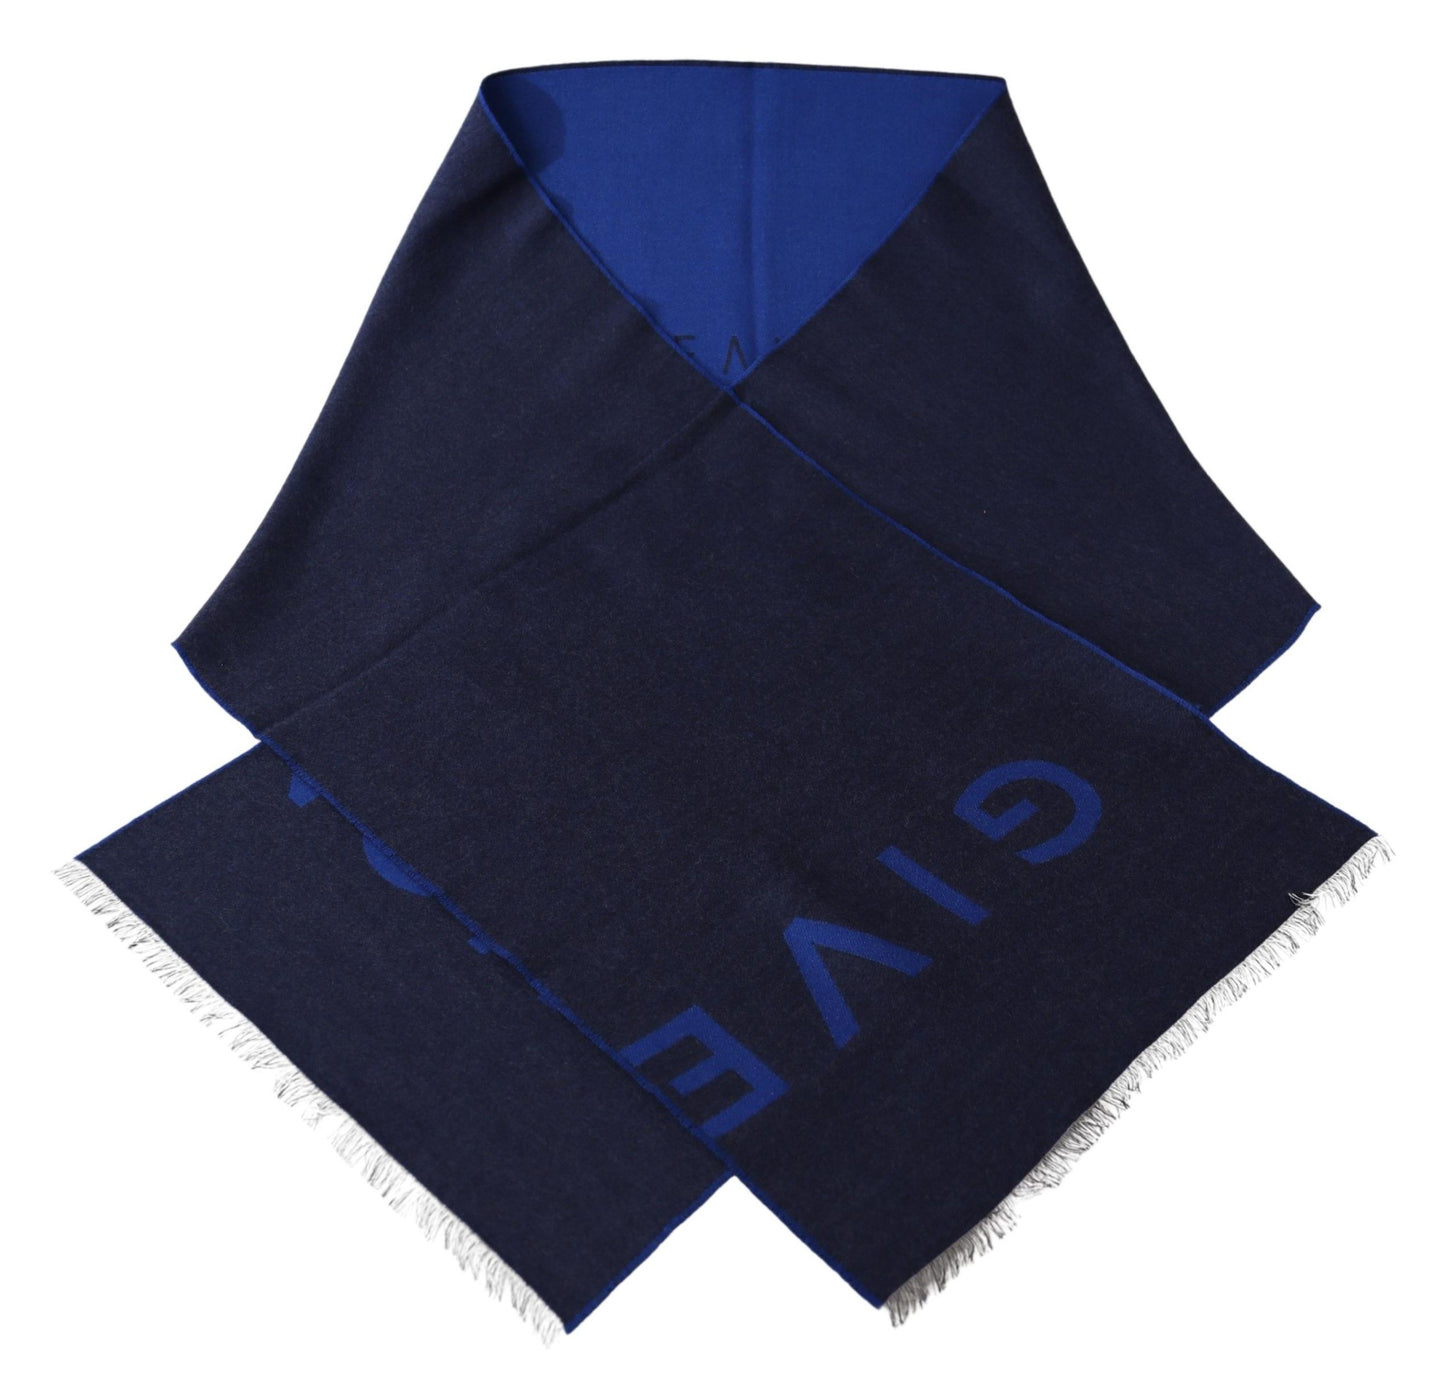 Givenchy Blue Wolle Unisex Winter warmer Schal Wickelschal